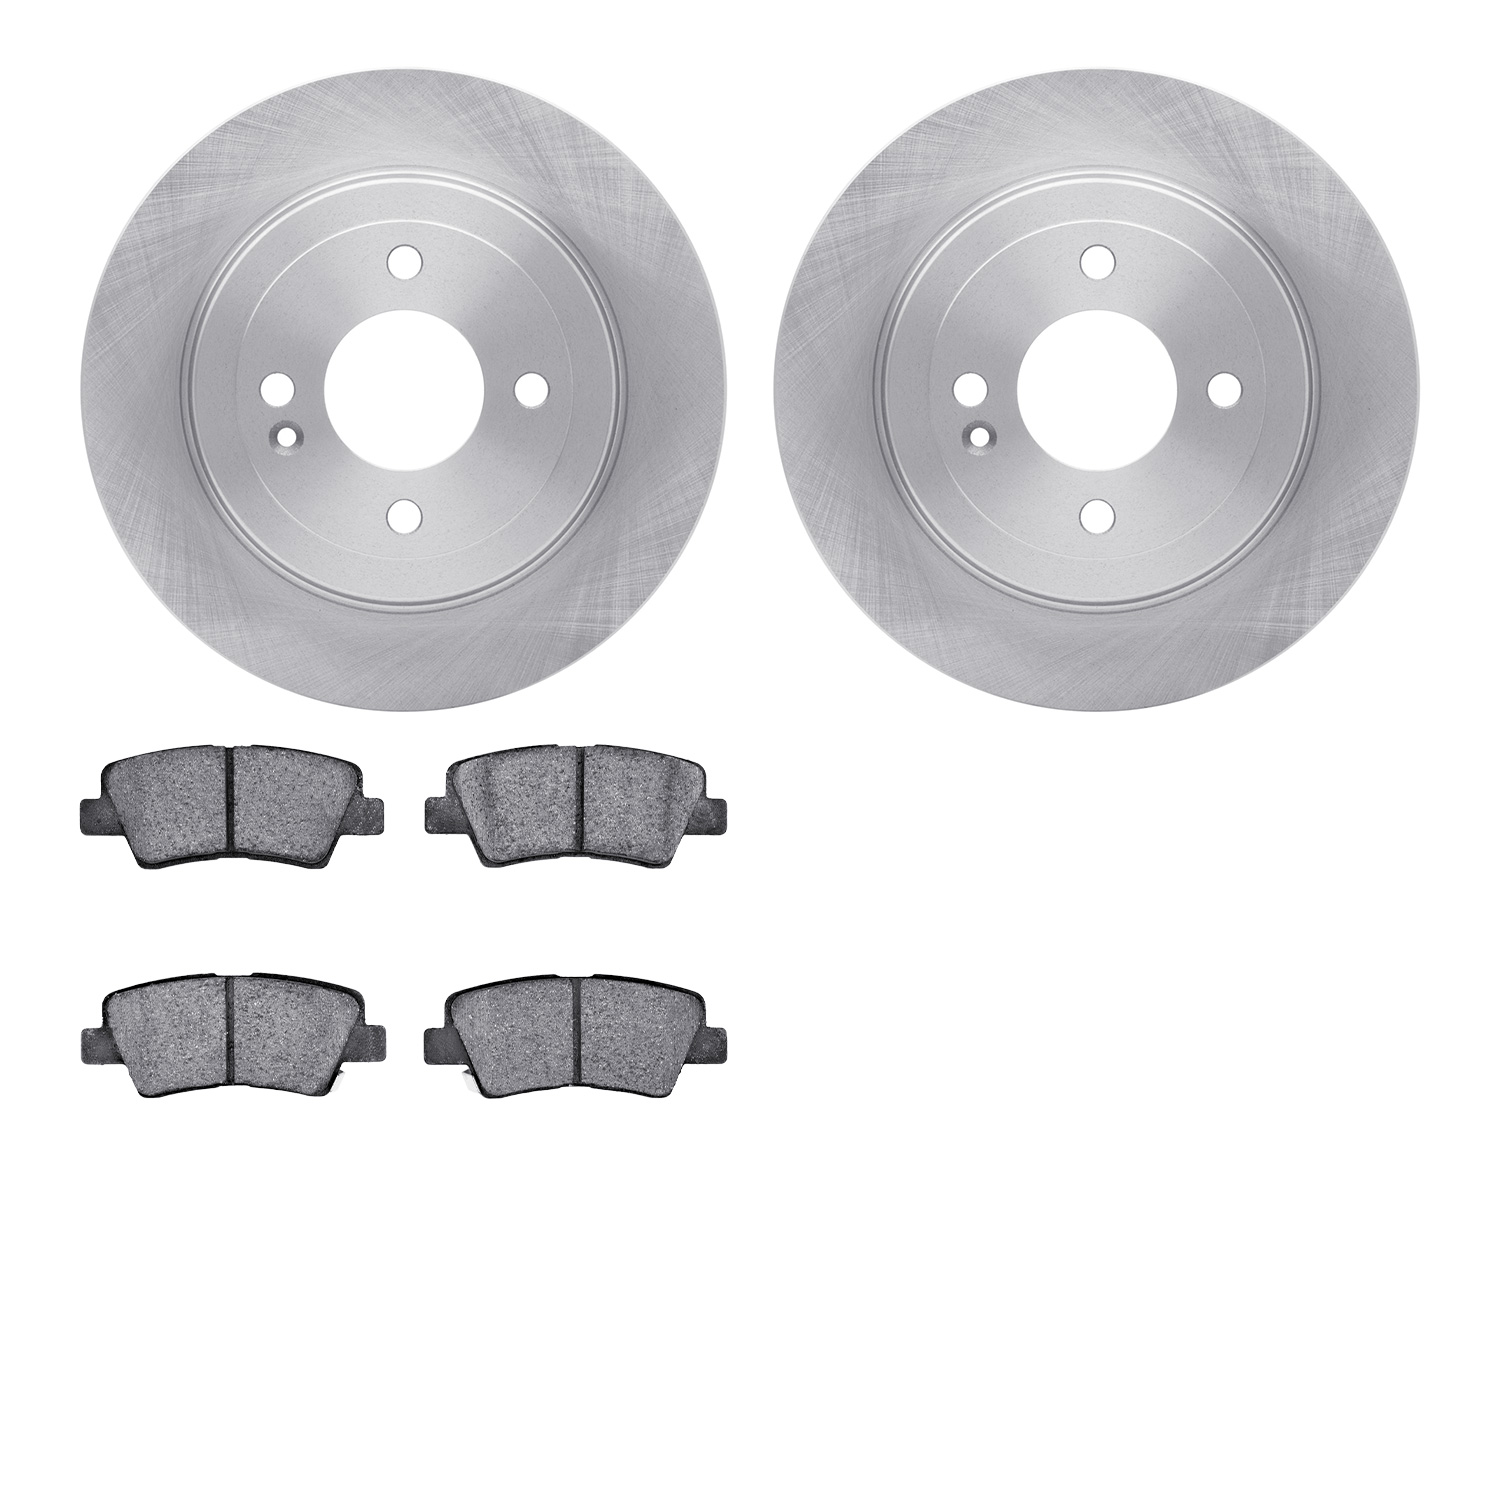 6302-03079 Brake Rotors with 3000-Series Ceramic Brake Pads Kit, Fits Select Multiple Makes/Models, Position: Rear